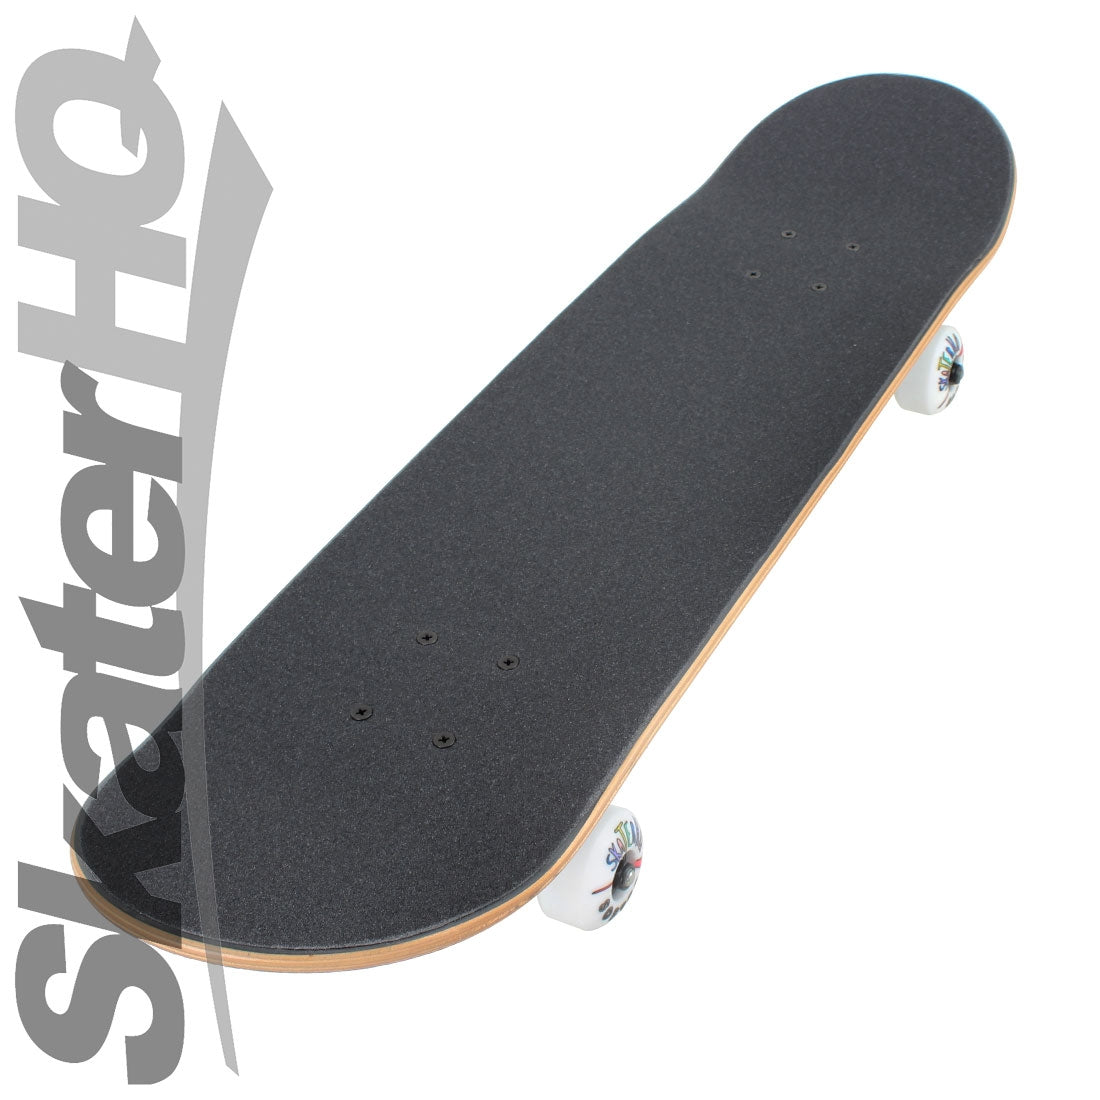 Skater HQ Ugly Stick 7.25 Mini S Complete Skateboard Completes Modern Street